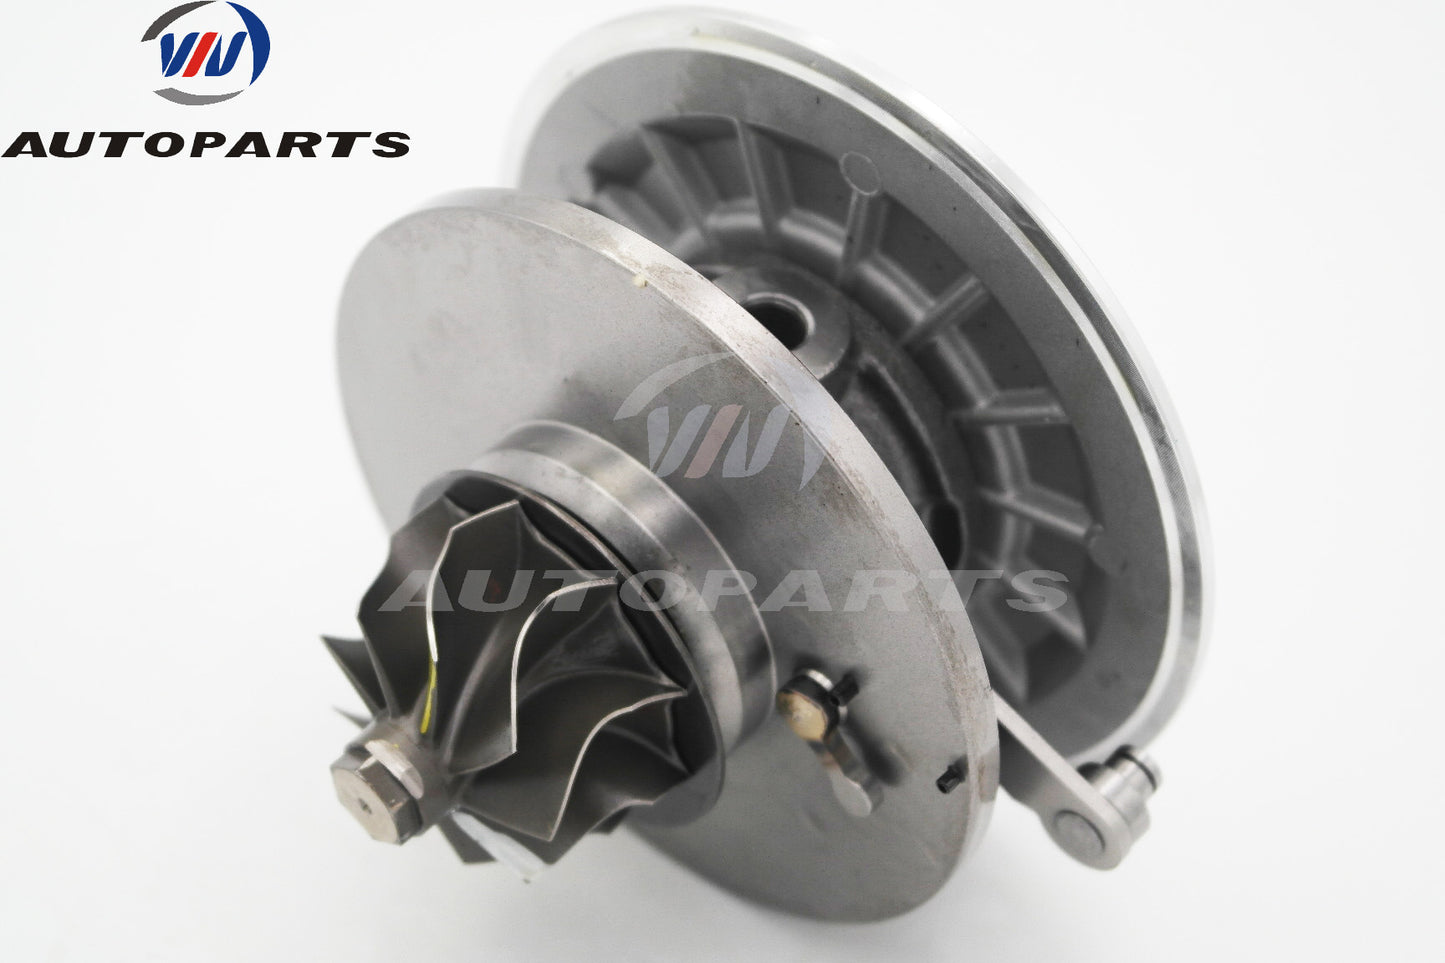 CHRA 703891-0137 for Turbocharger 736088-0003 for Mercedes Sprinter I 2.7L Diesel Engine